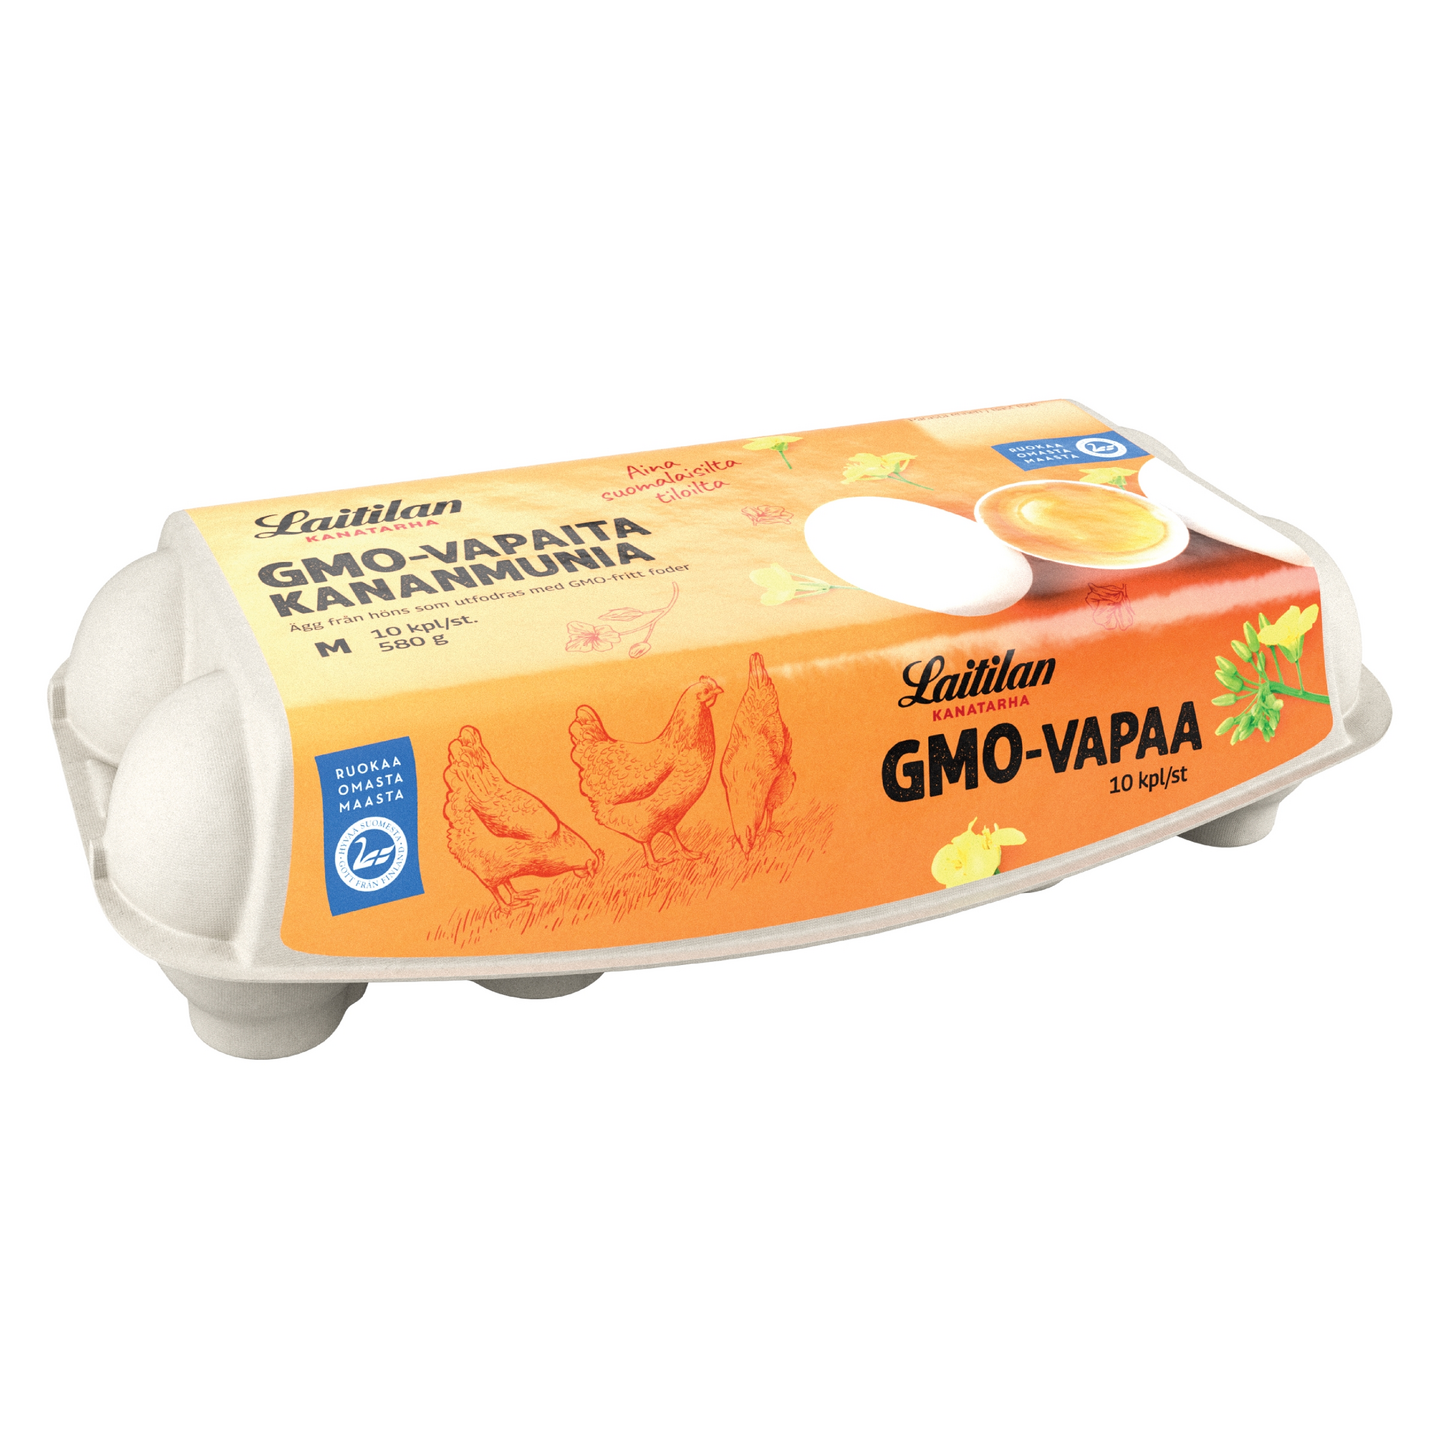 Laitilan Kanatarhan GMO-vapaa vapaan kanan kananmuna M10 580g KONTTI